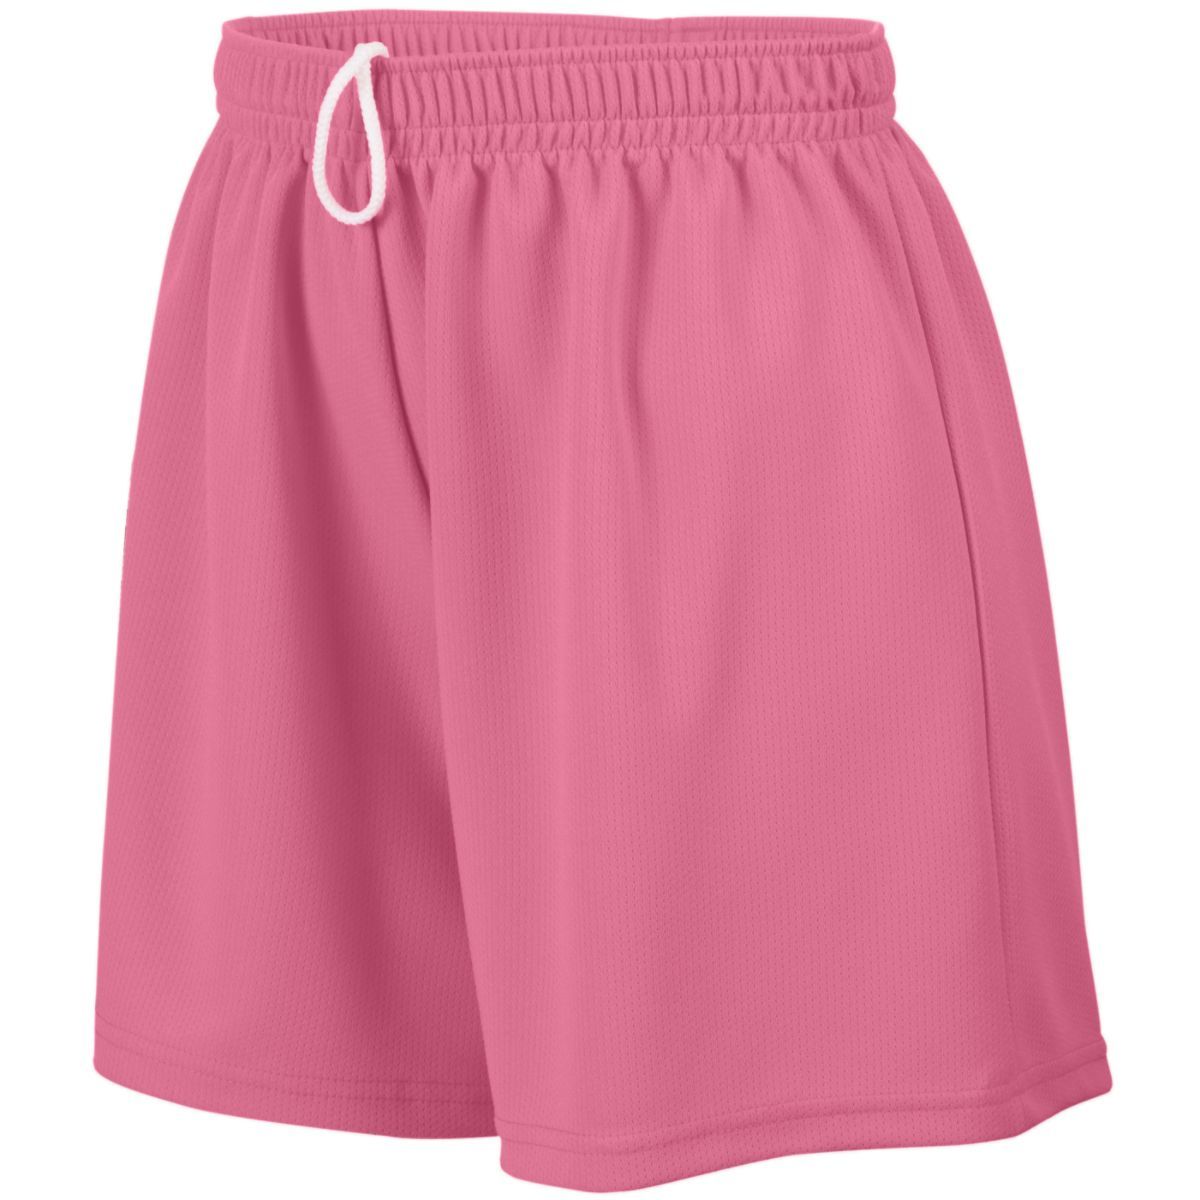 Augusta Sportswear Ladies Wicking Mesh Shorts in Pink  -Part of the Ladies, Ladies-Shorts, Augusta-Products, Lacrosse, All-Sports, All-Sports-1 product lines at KanaleyCreations.com